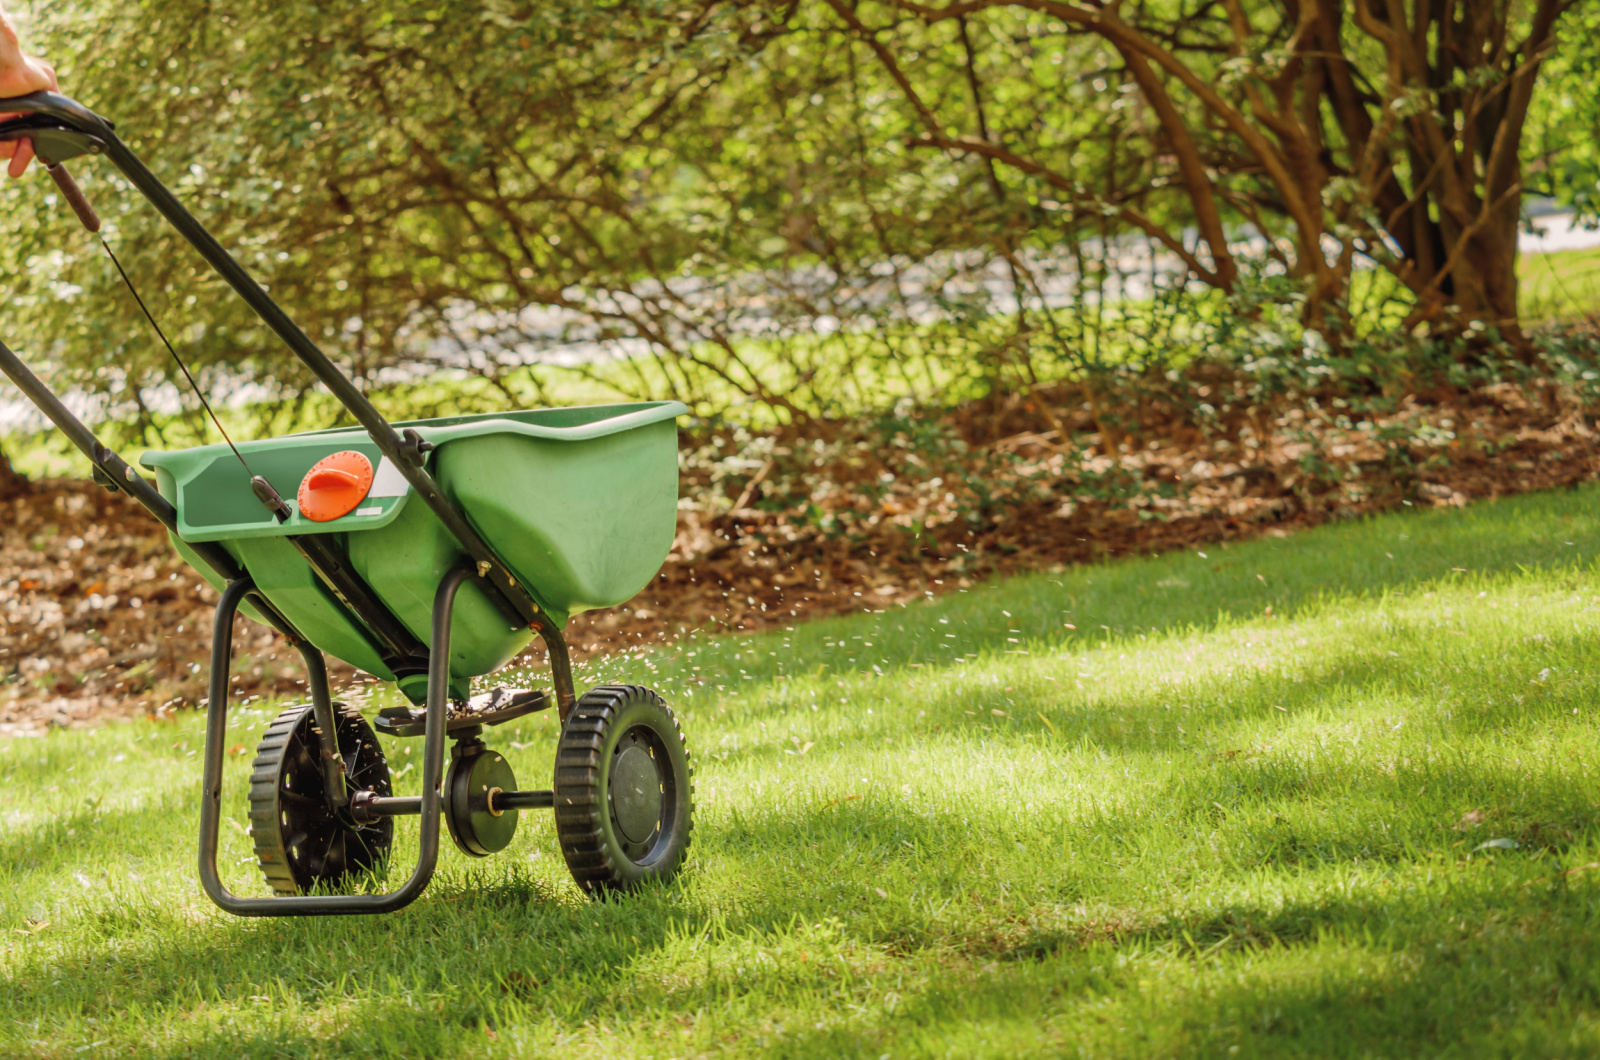 Fertilizing lawn with manual grass fertilizer spreader